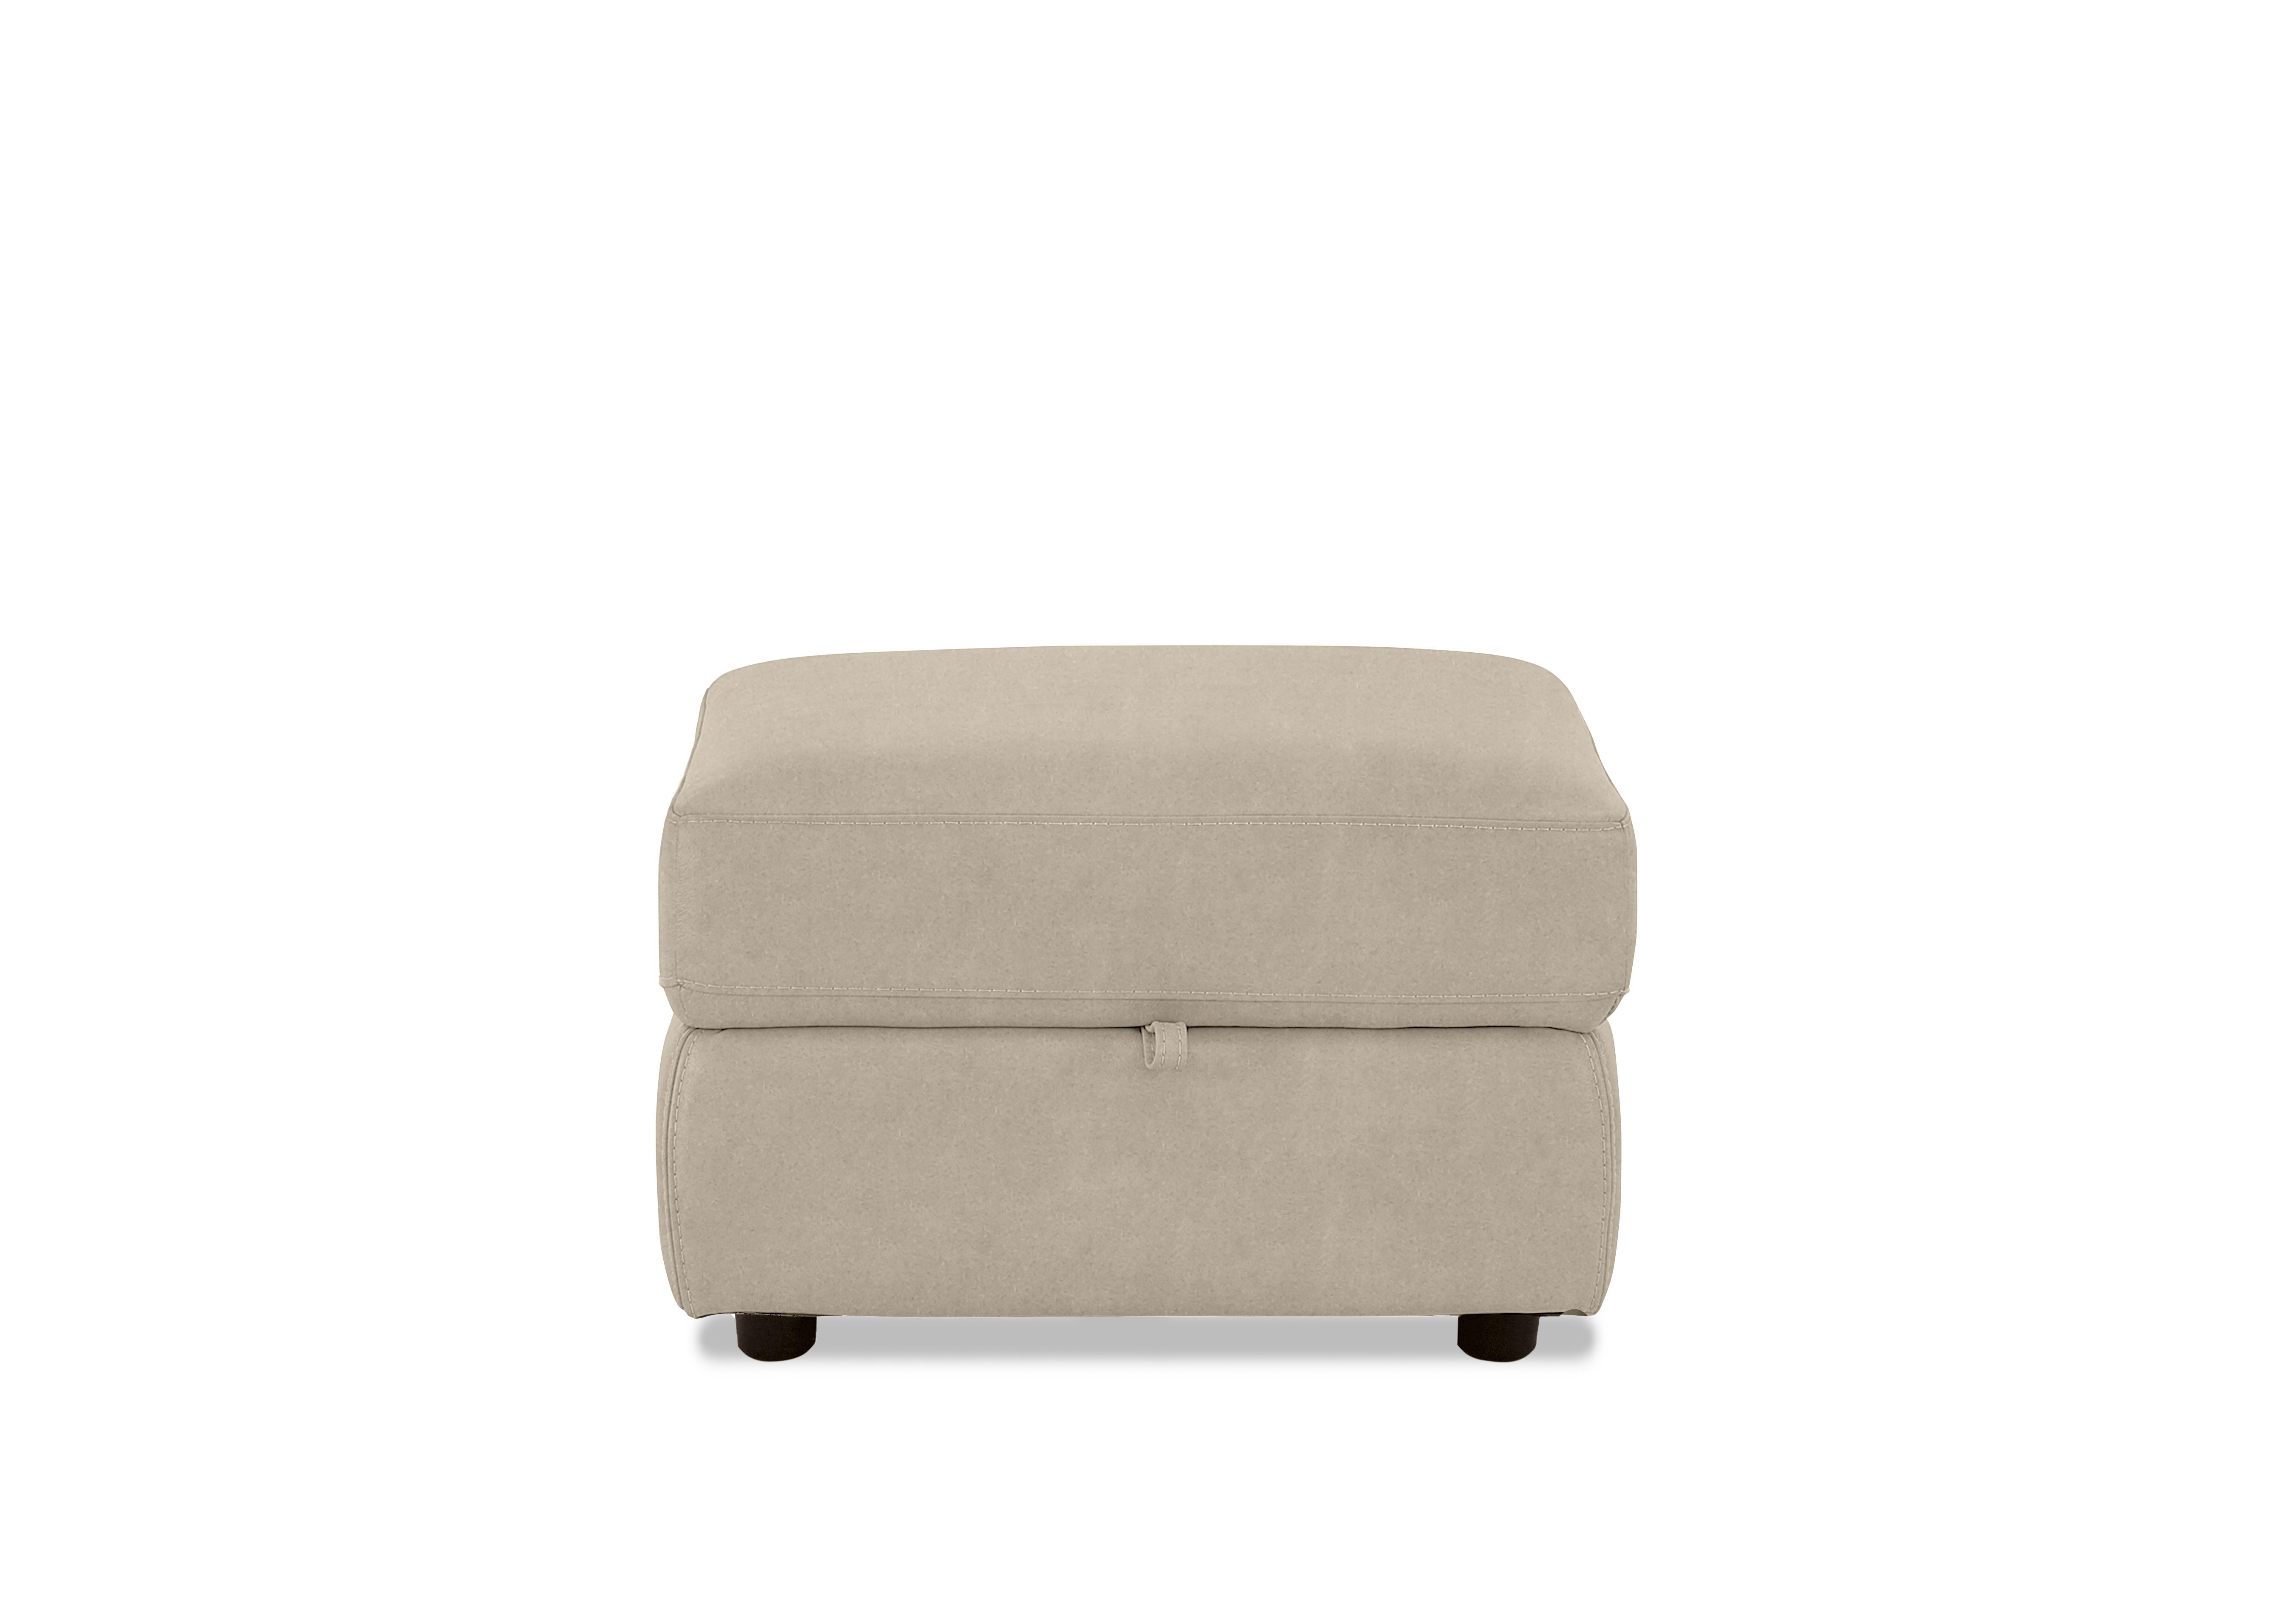 Touch Fabric Storage Footstool in Bfa-Bnn-R26 Fv2 Cream on Furniture Village